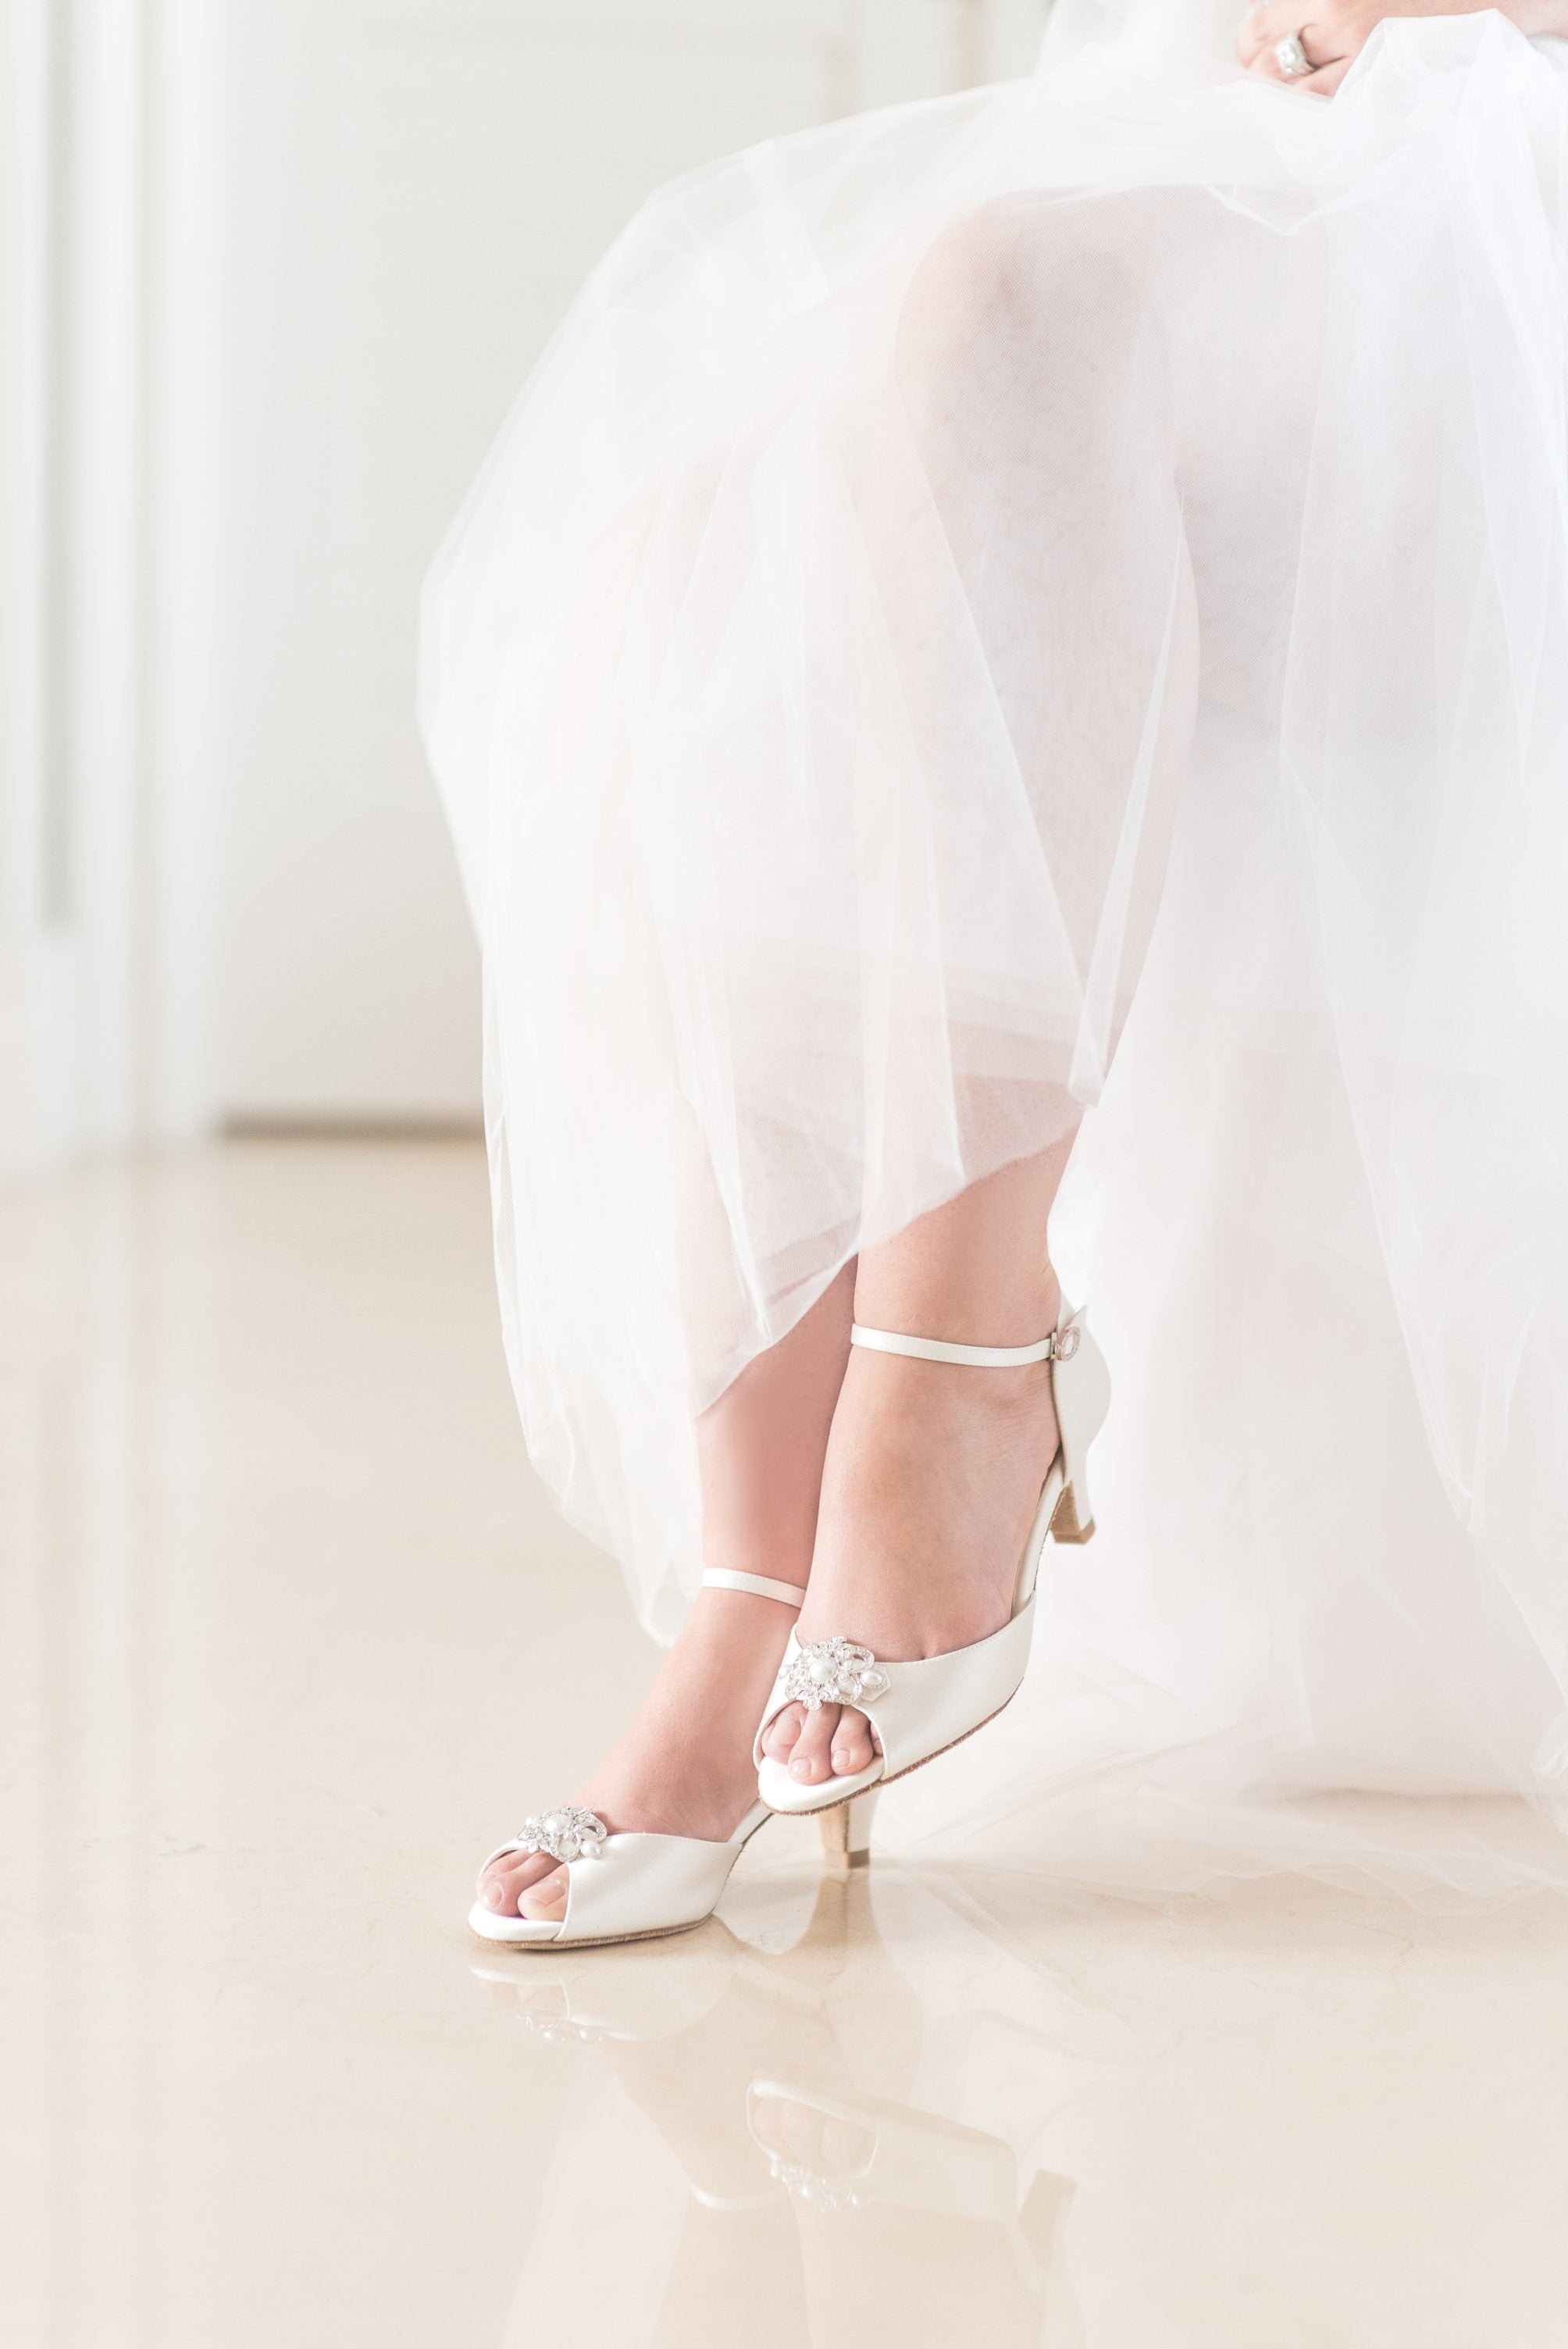 Pearl wedding shoes from Angela Nuran